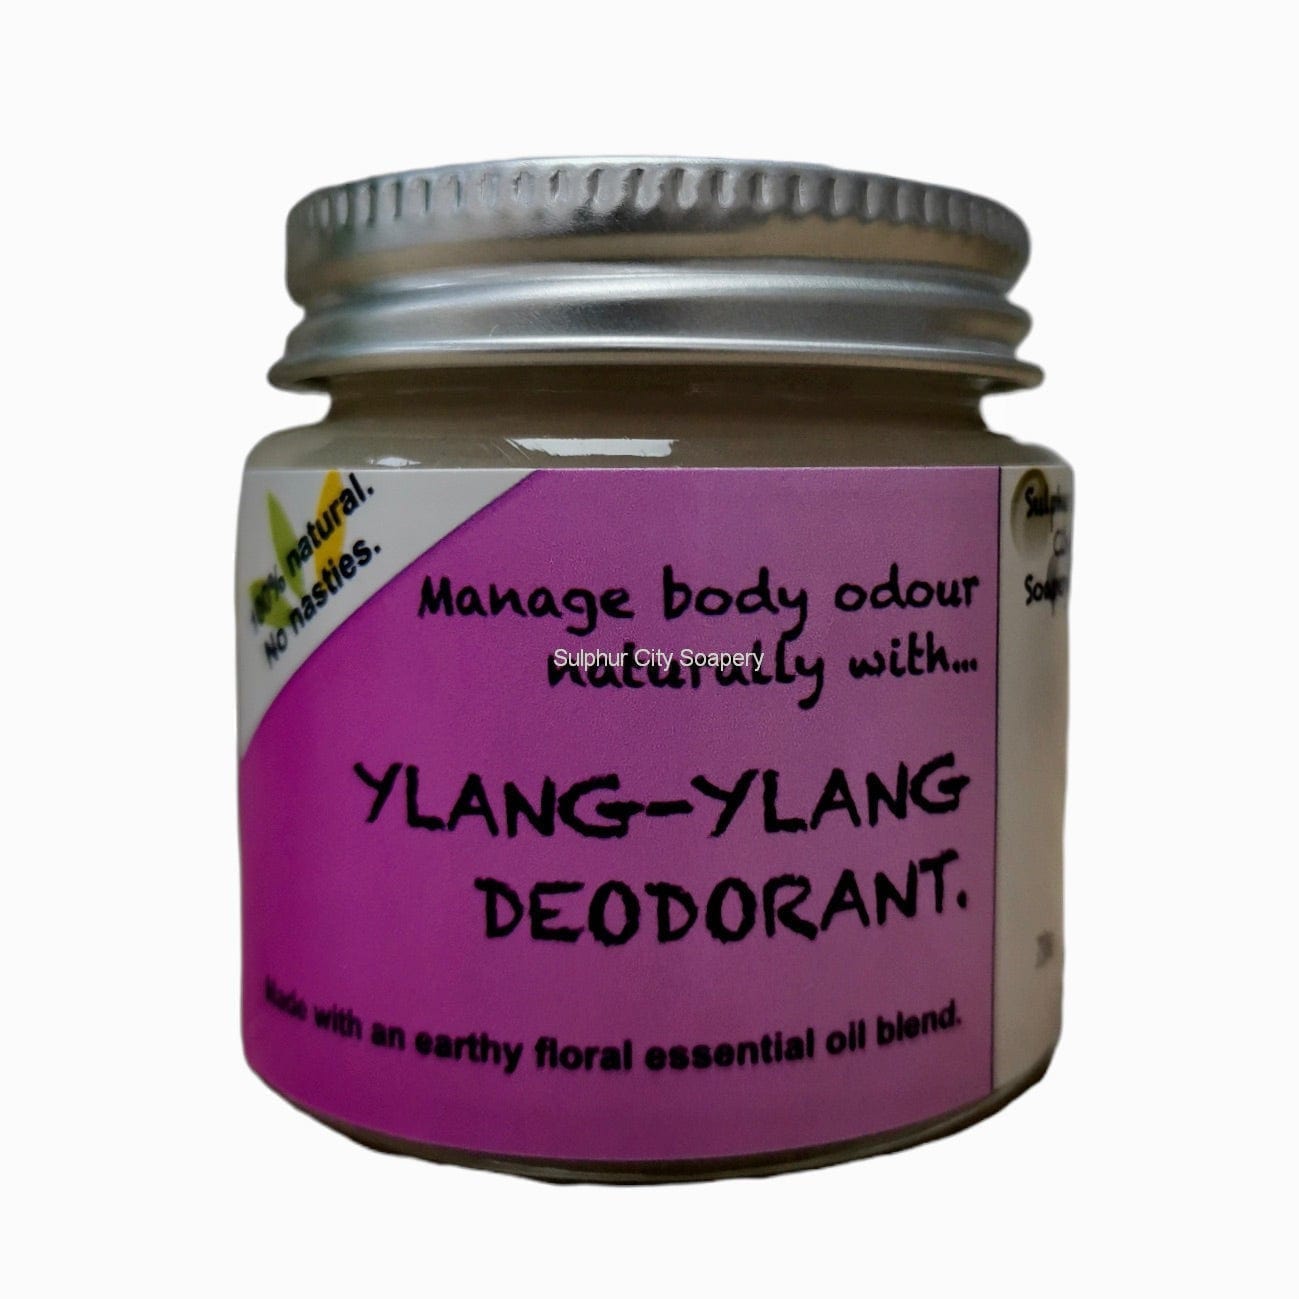 Sulphur City Soapery Ylang-Ylang natural deodorant.